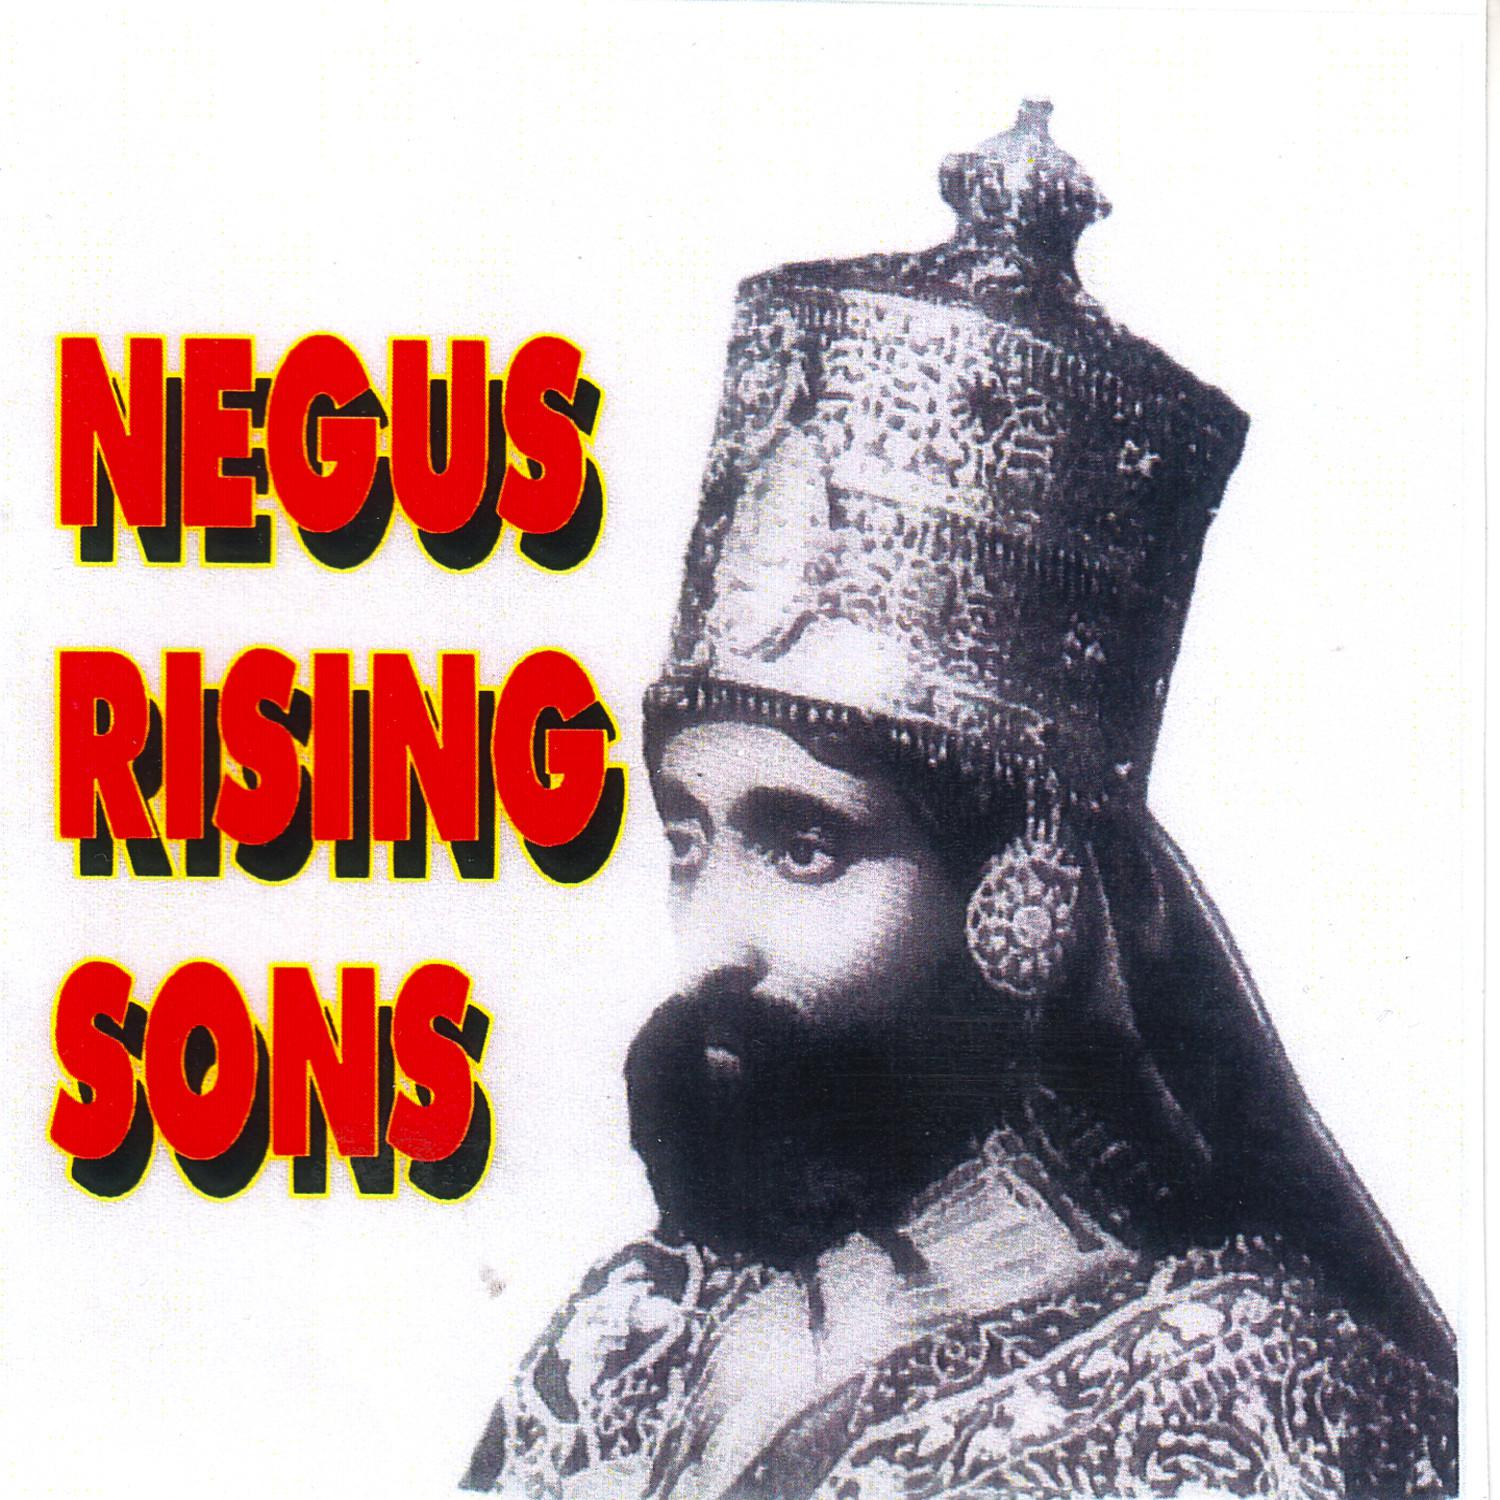 Negus Rising Sons